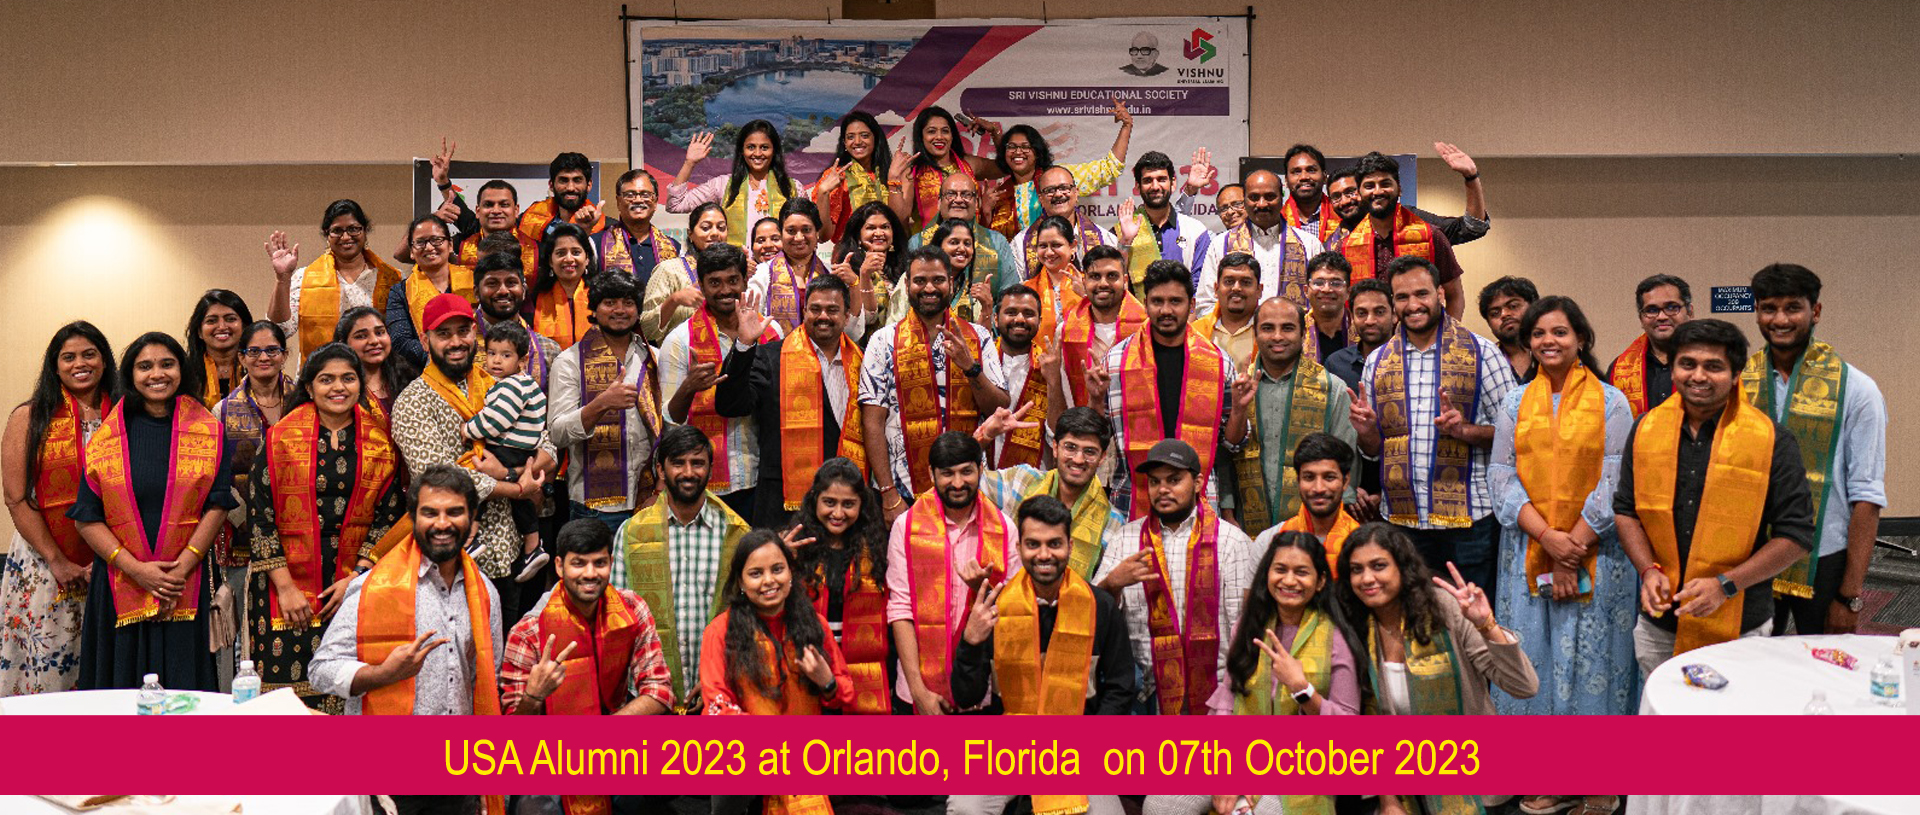 USA Alumni 2023 at Orlando, Florida